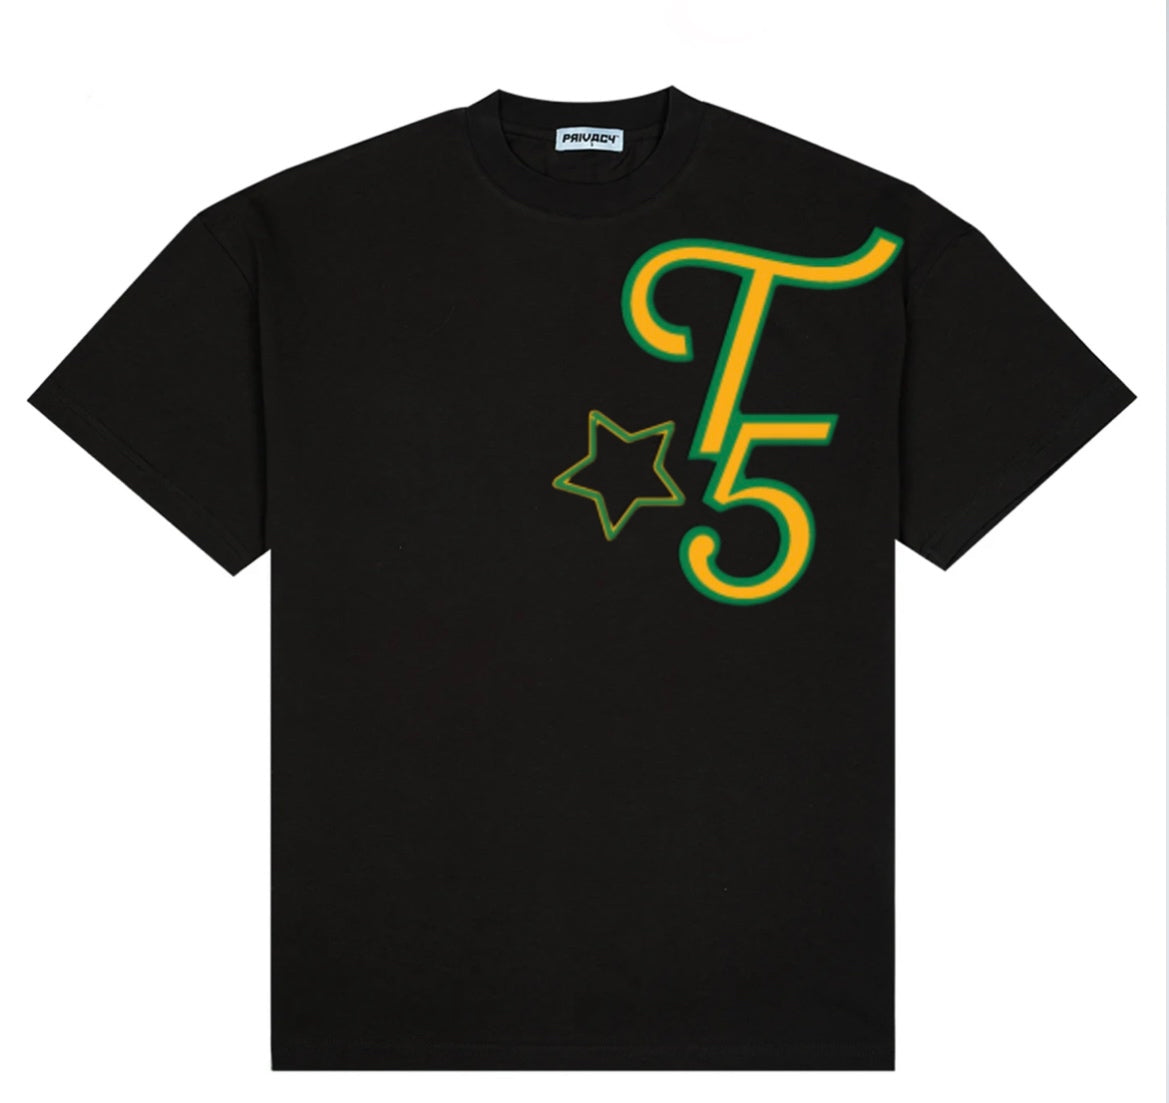 T5 Shirts